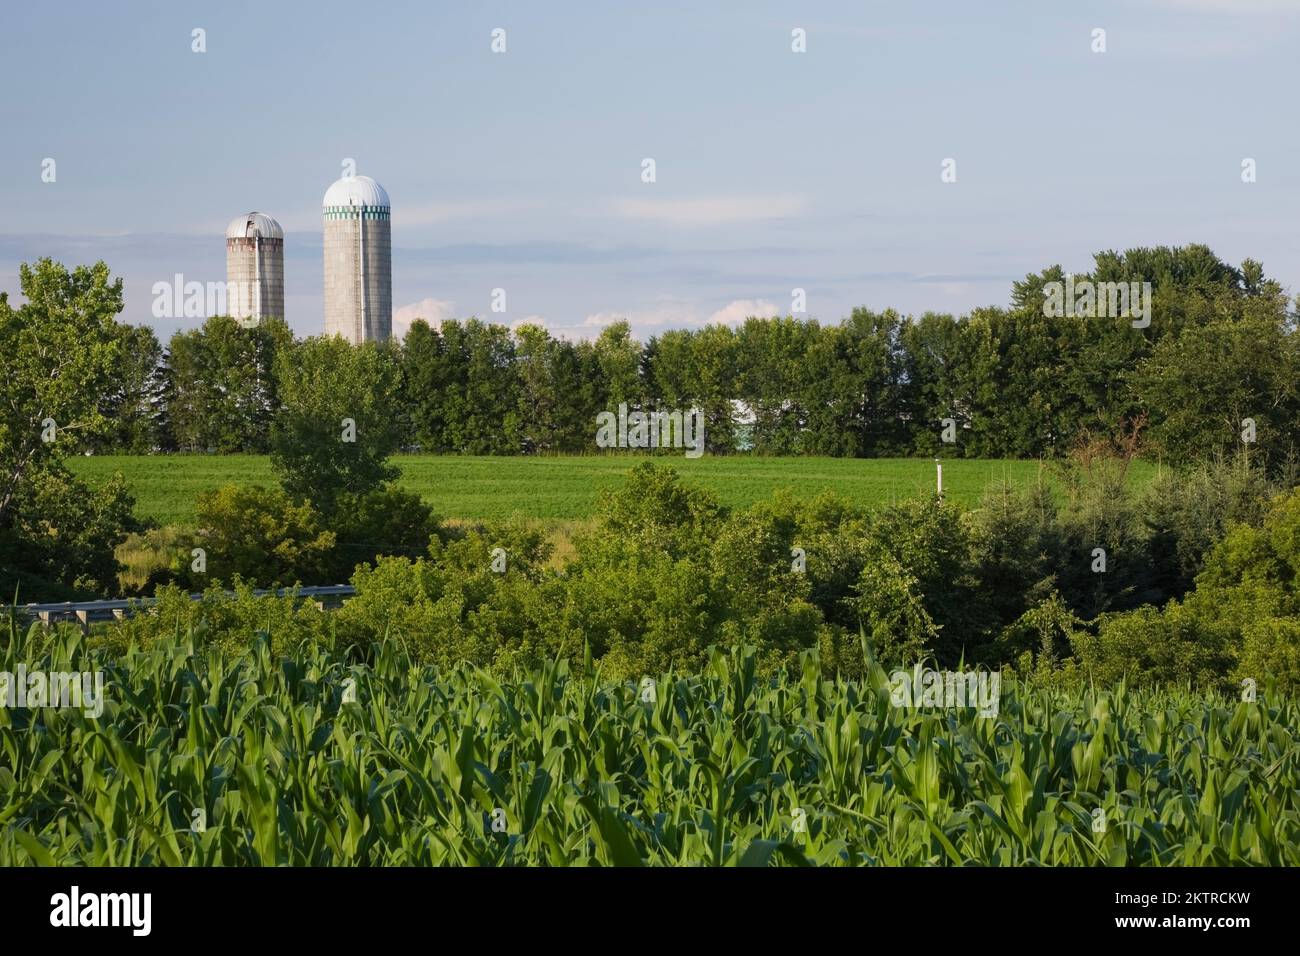 Corn field and farm silos in summer, Baie du Febvre, Quebec, Canada. Stock Photo